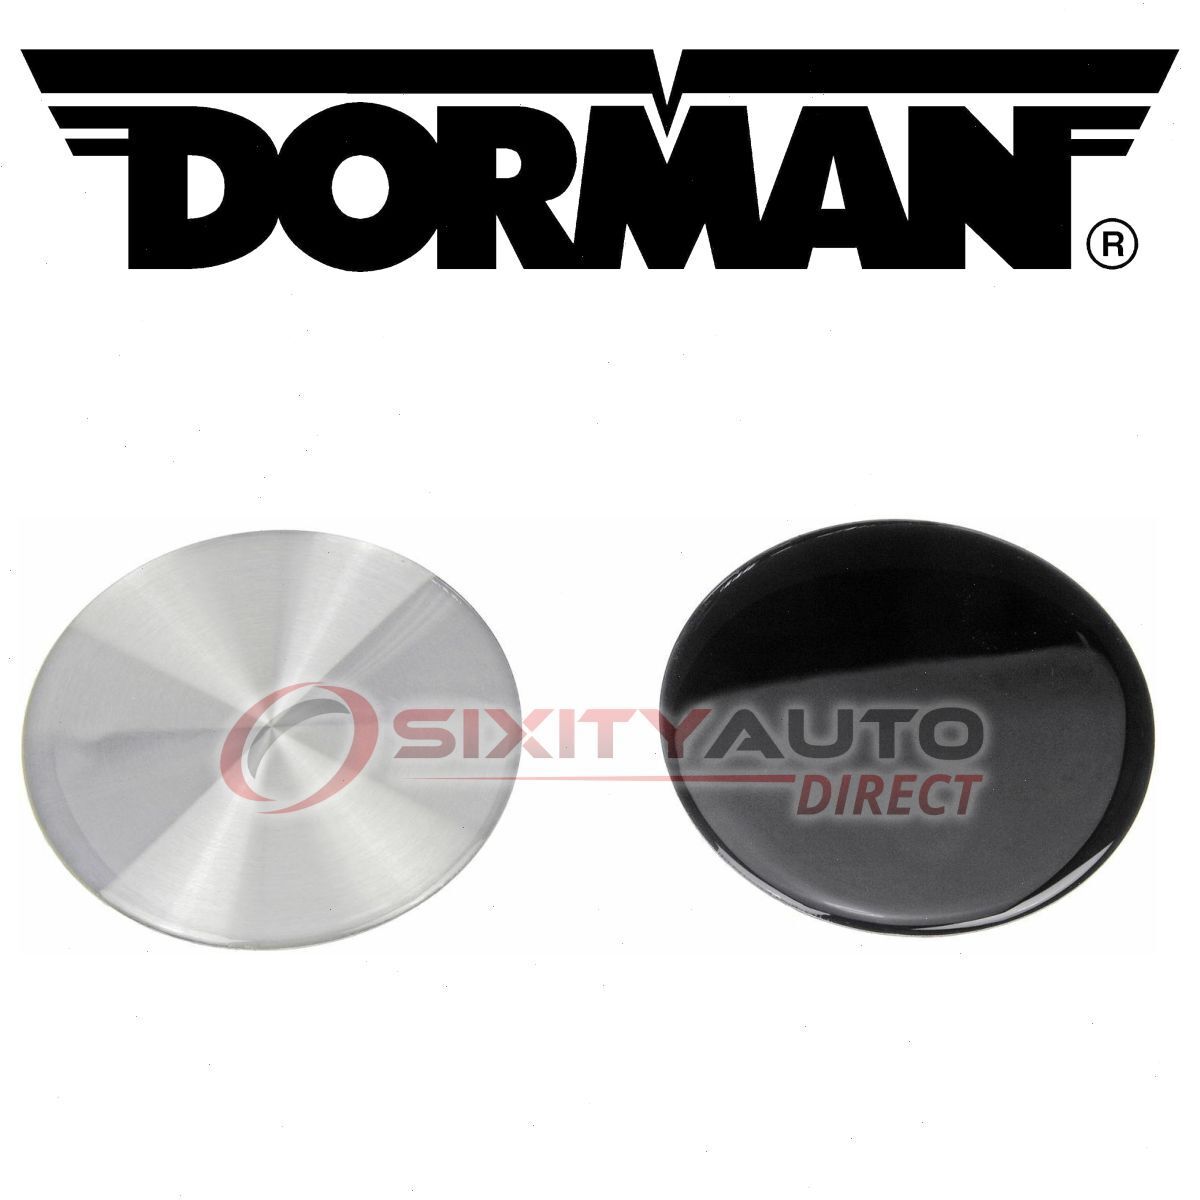 Dorman Wheel Cap for 2003-2012 GMC Savana 1500 Tire  mf